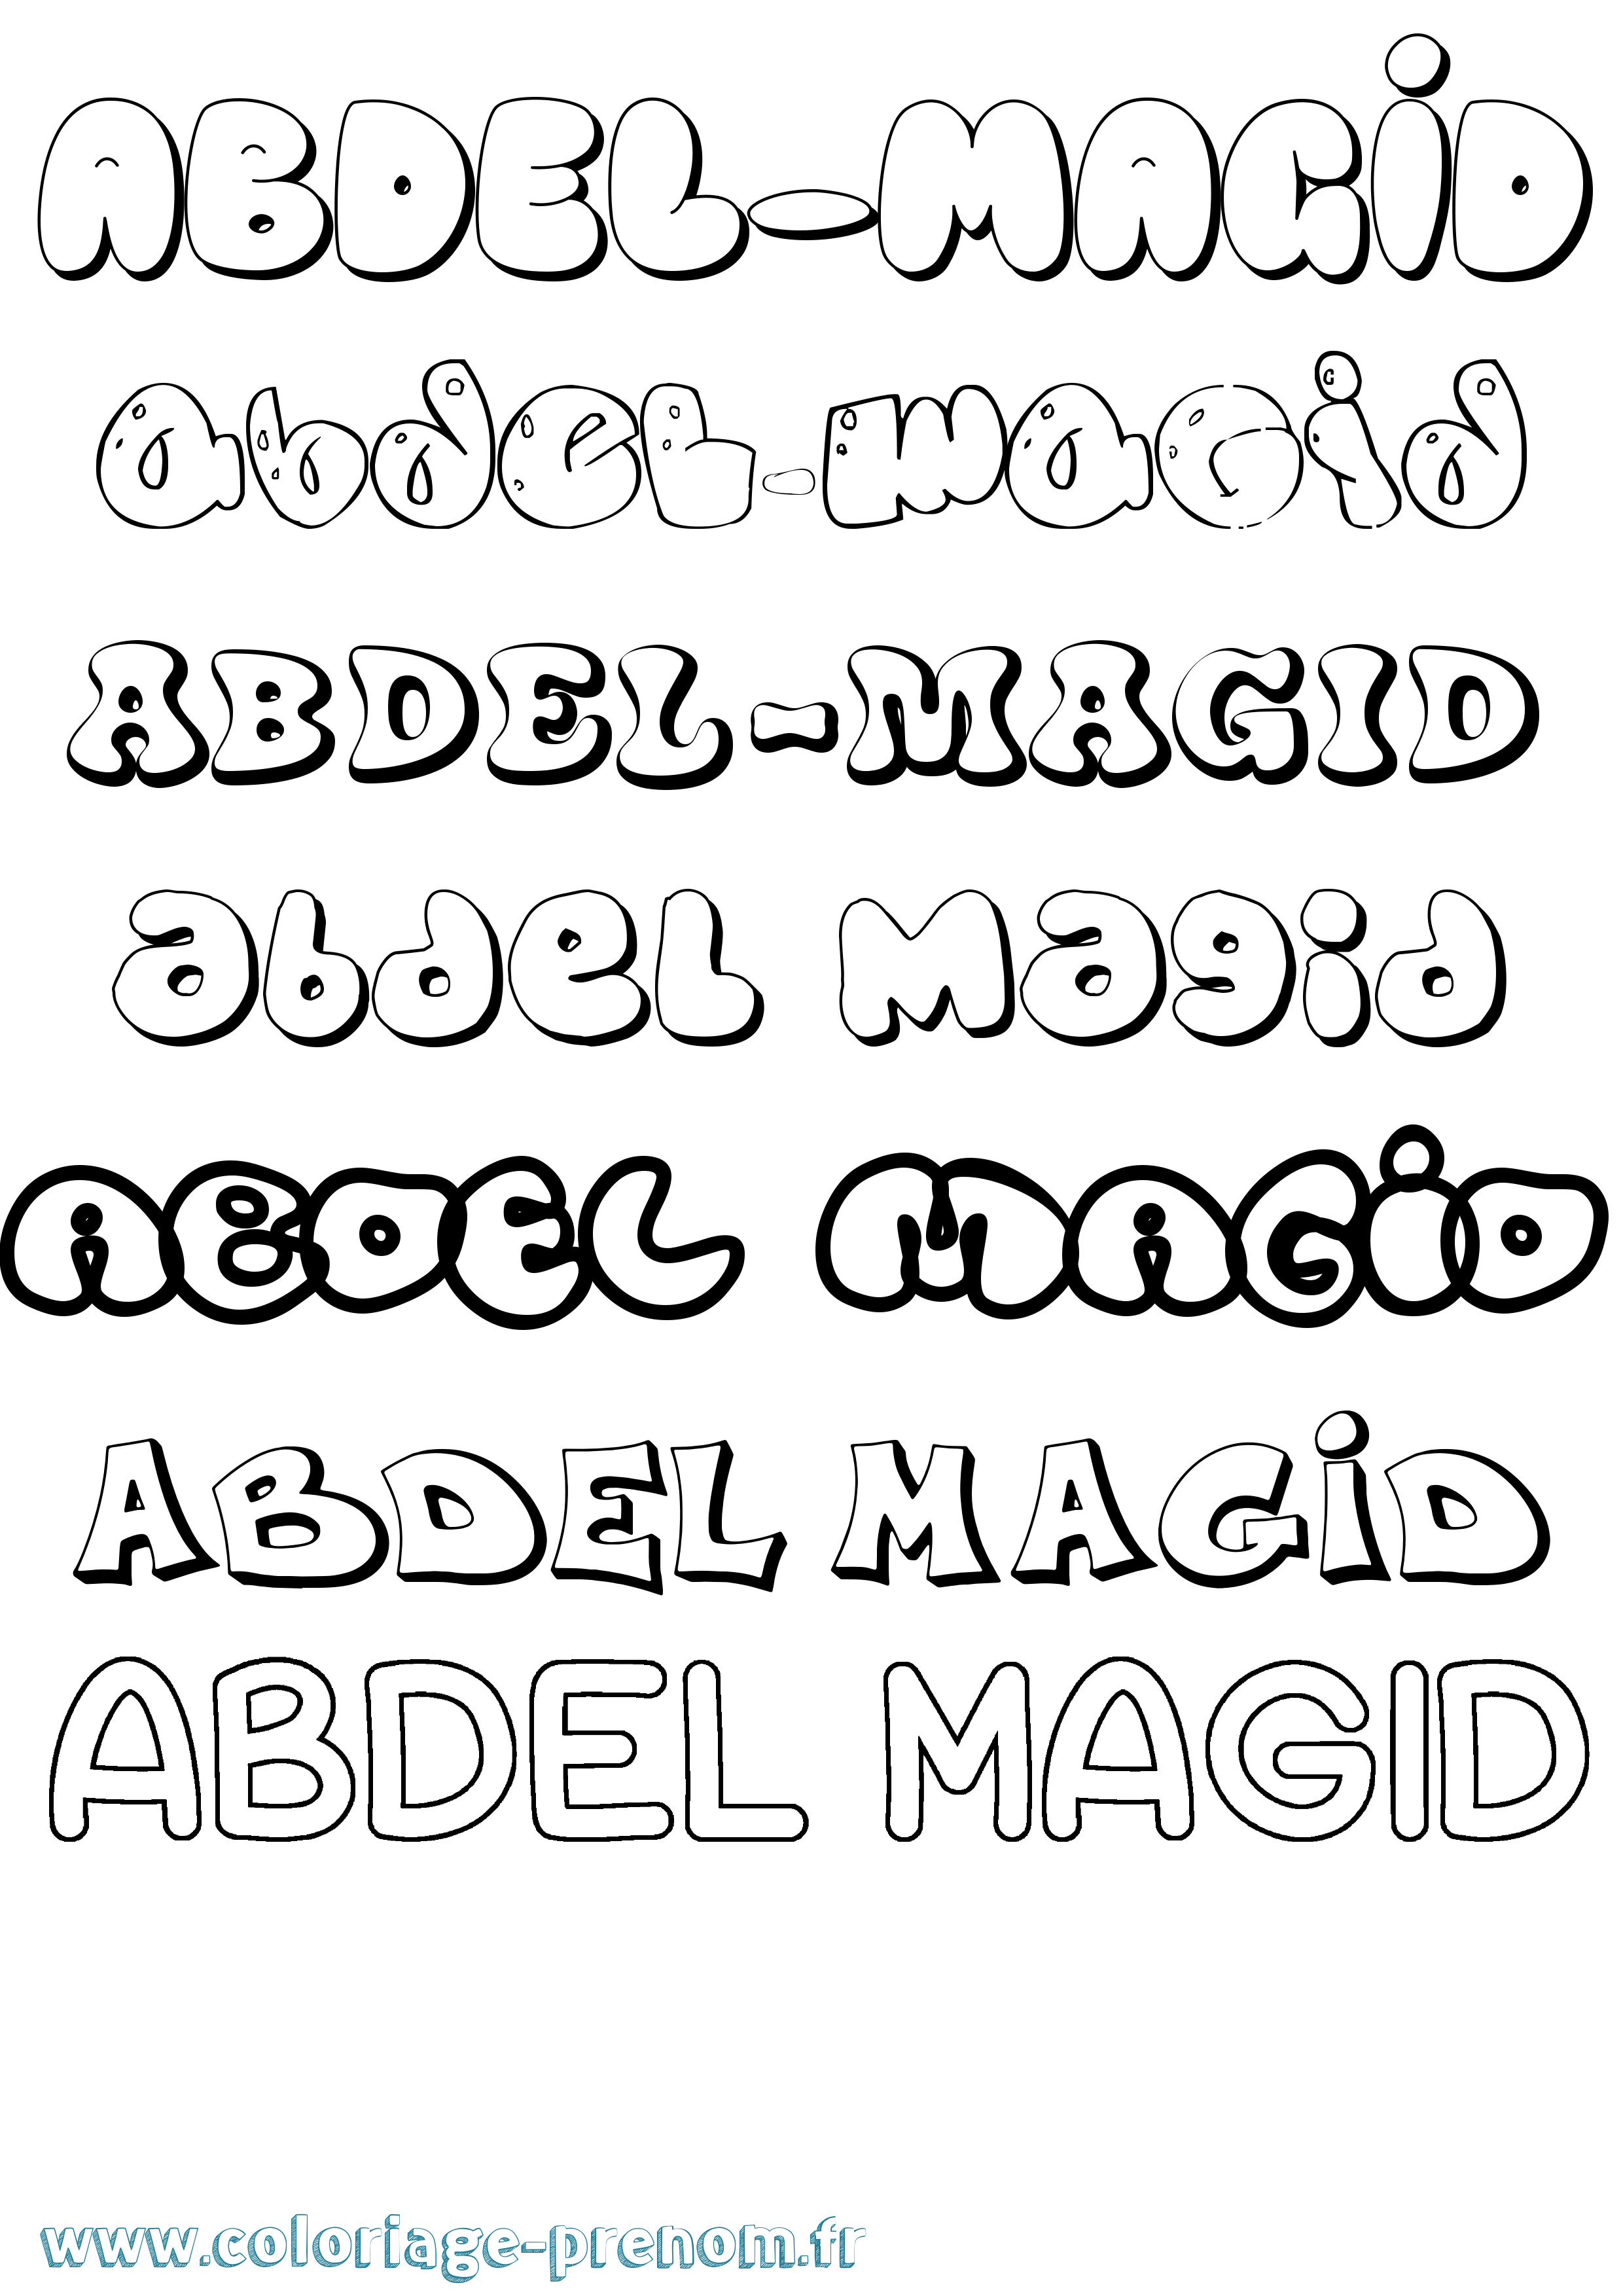 Coloriage prénom Abdel-Magid Bubble